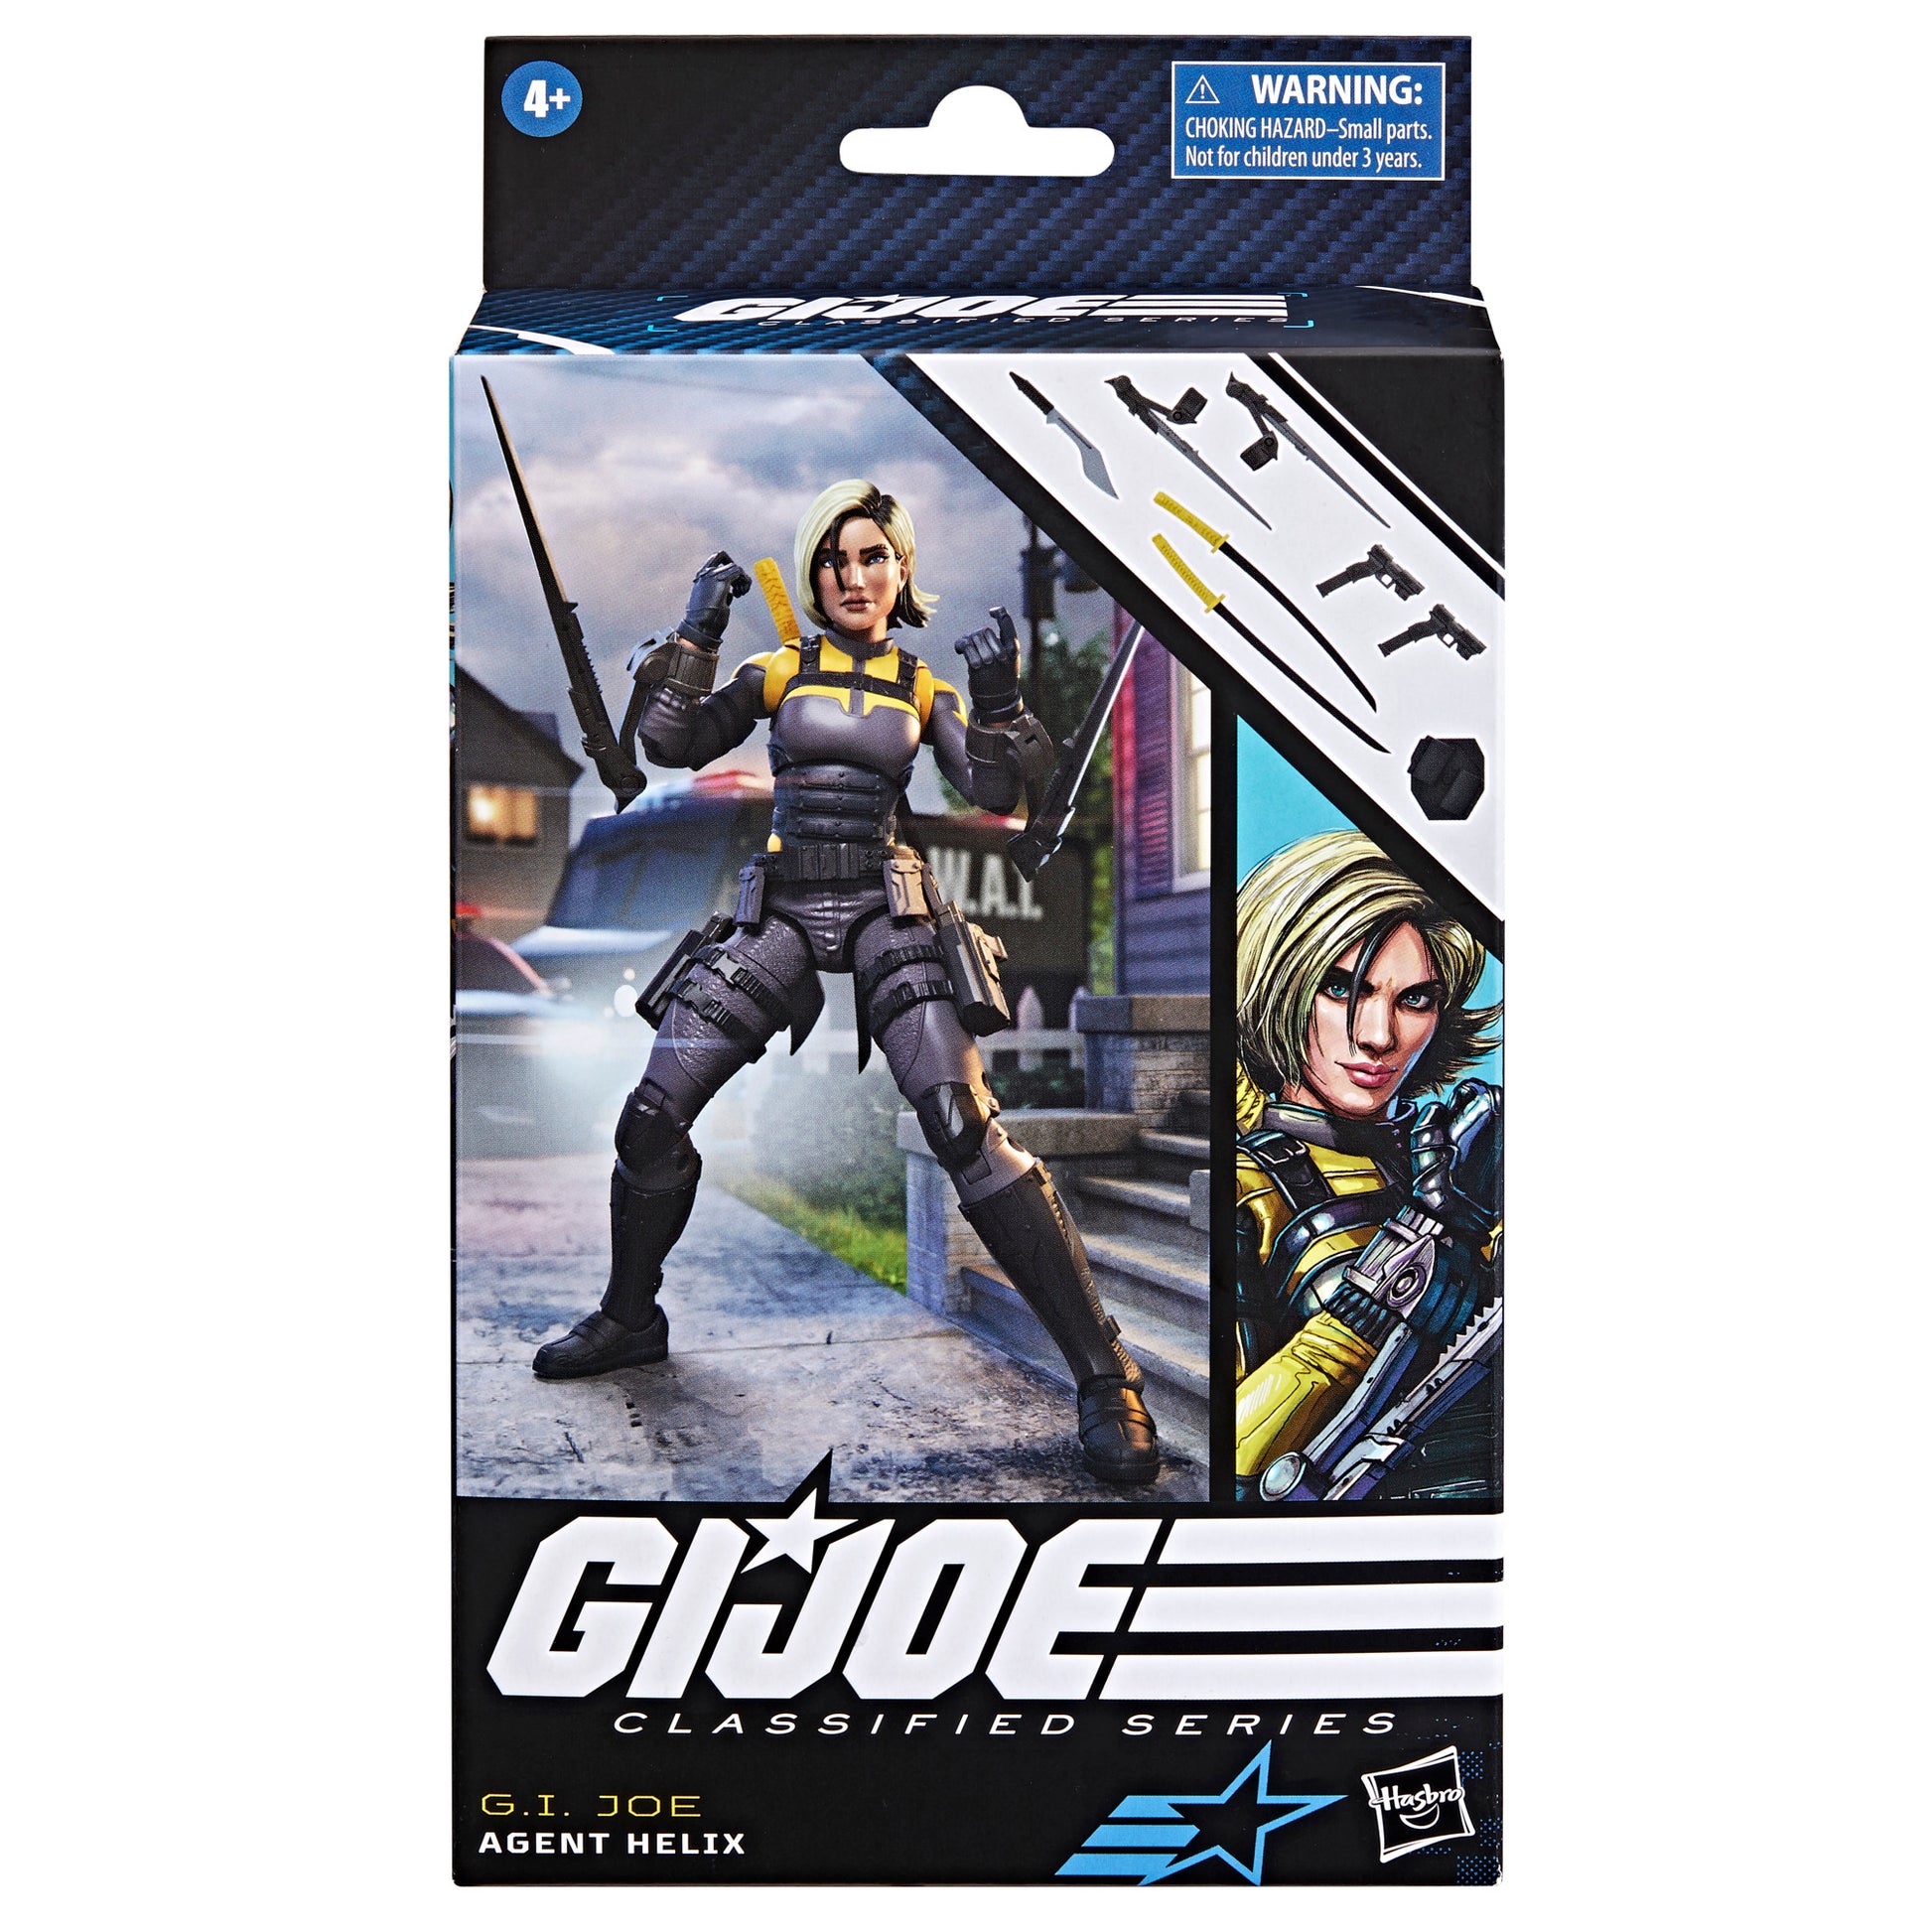 G.I. Joe Classified Series Agent Helix, Collectible G.I. Joe Action Figure (6"), 104 3